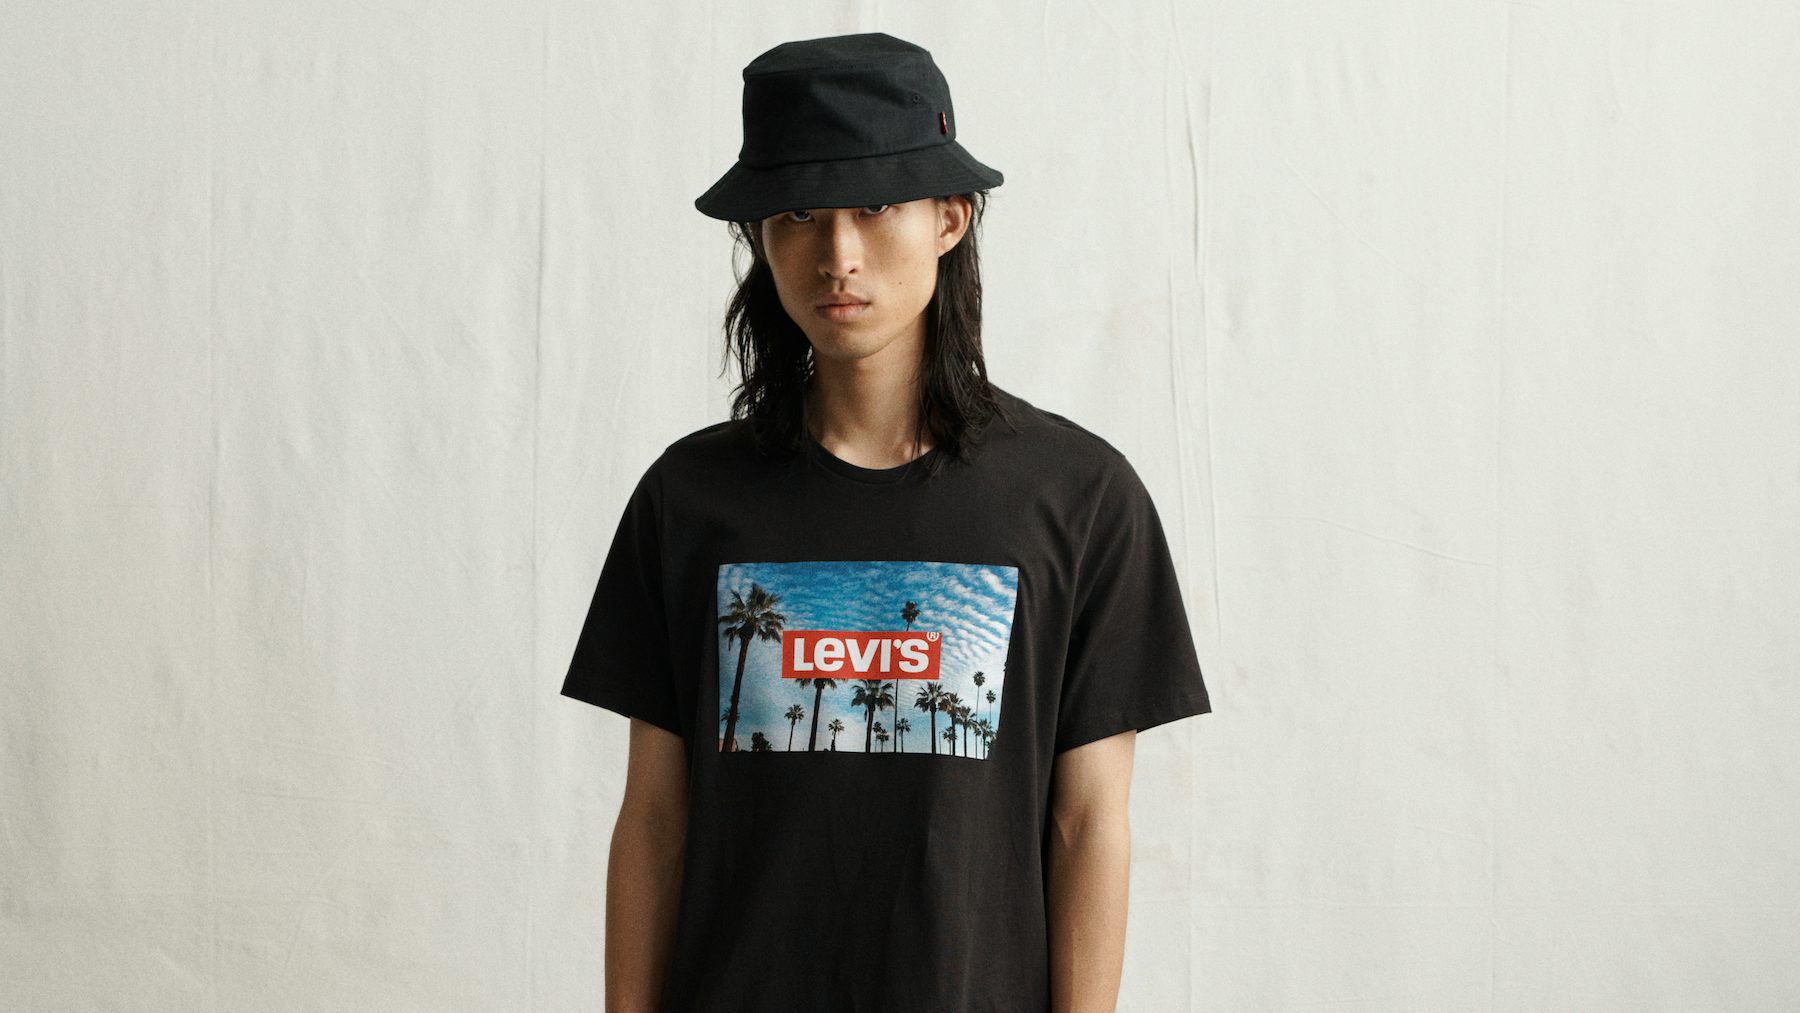 levi's brand shirt